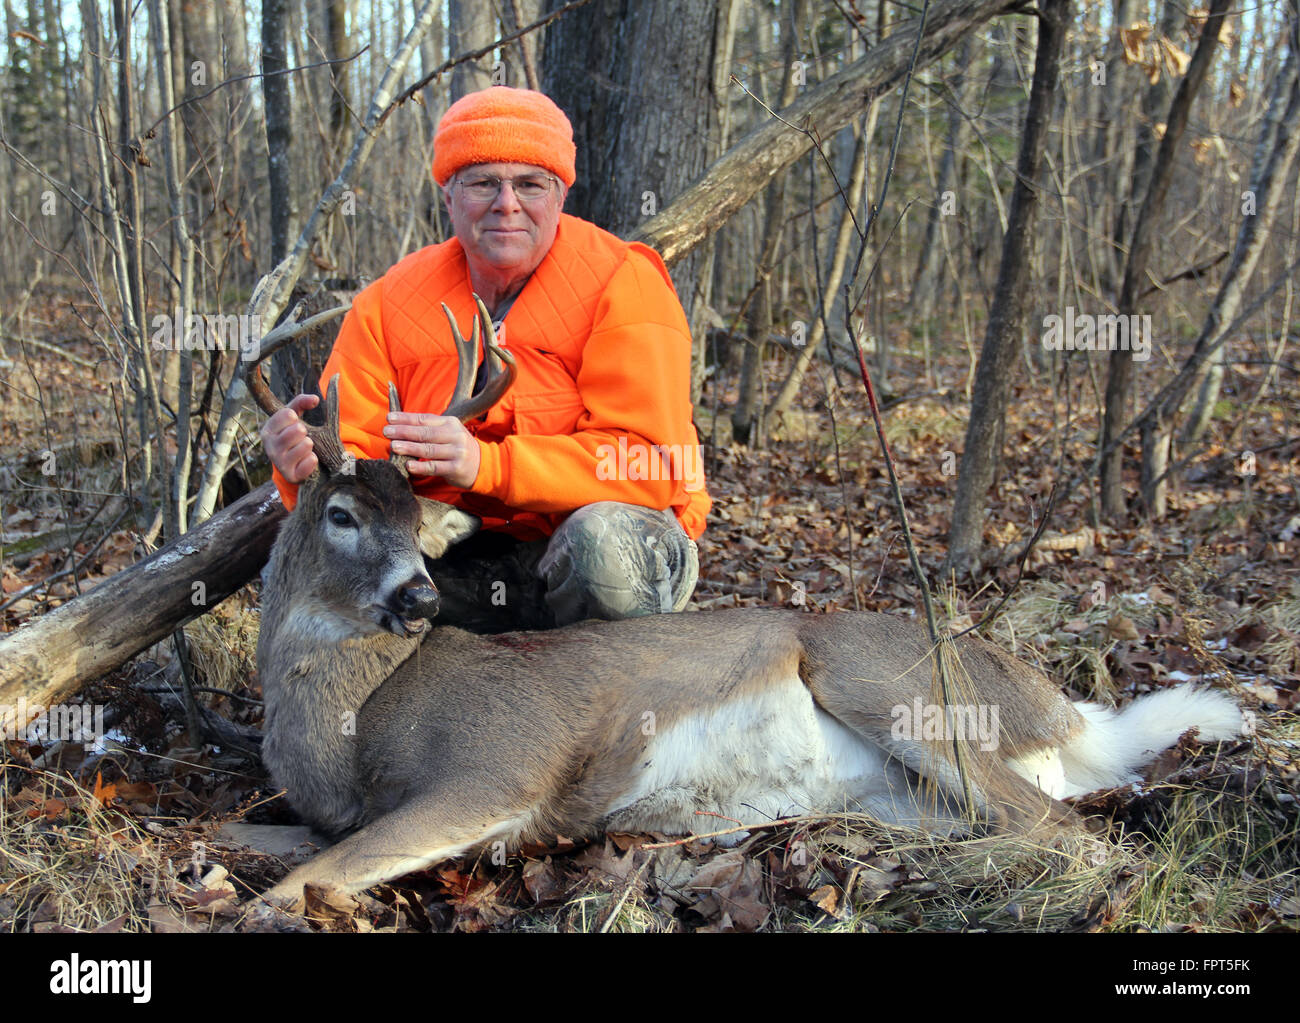 Deer hunter in blaze orange in the woods holding a ten point whitetail buck Stock Photo